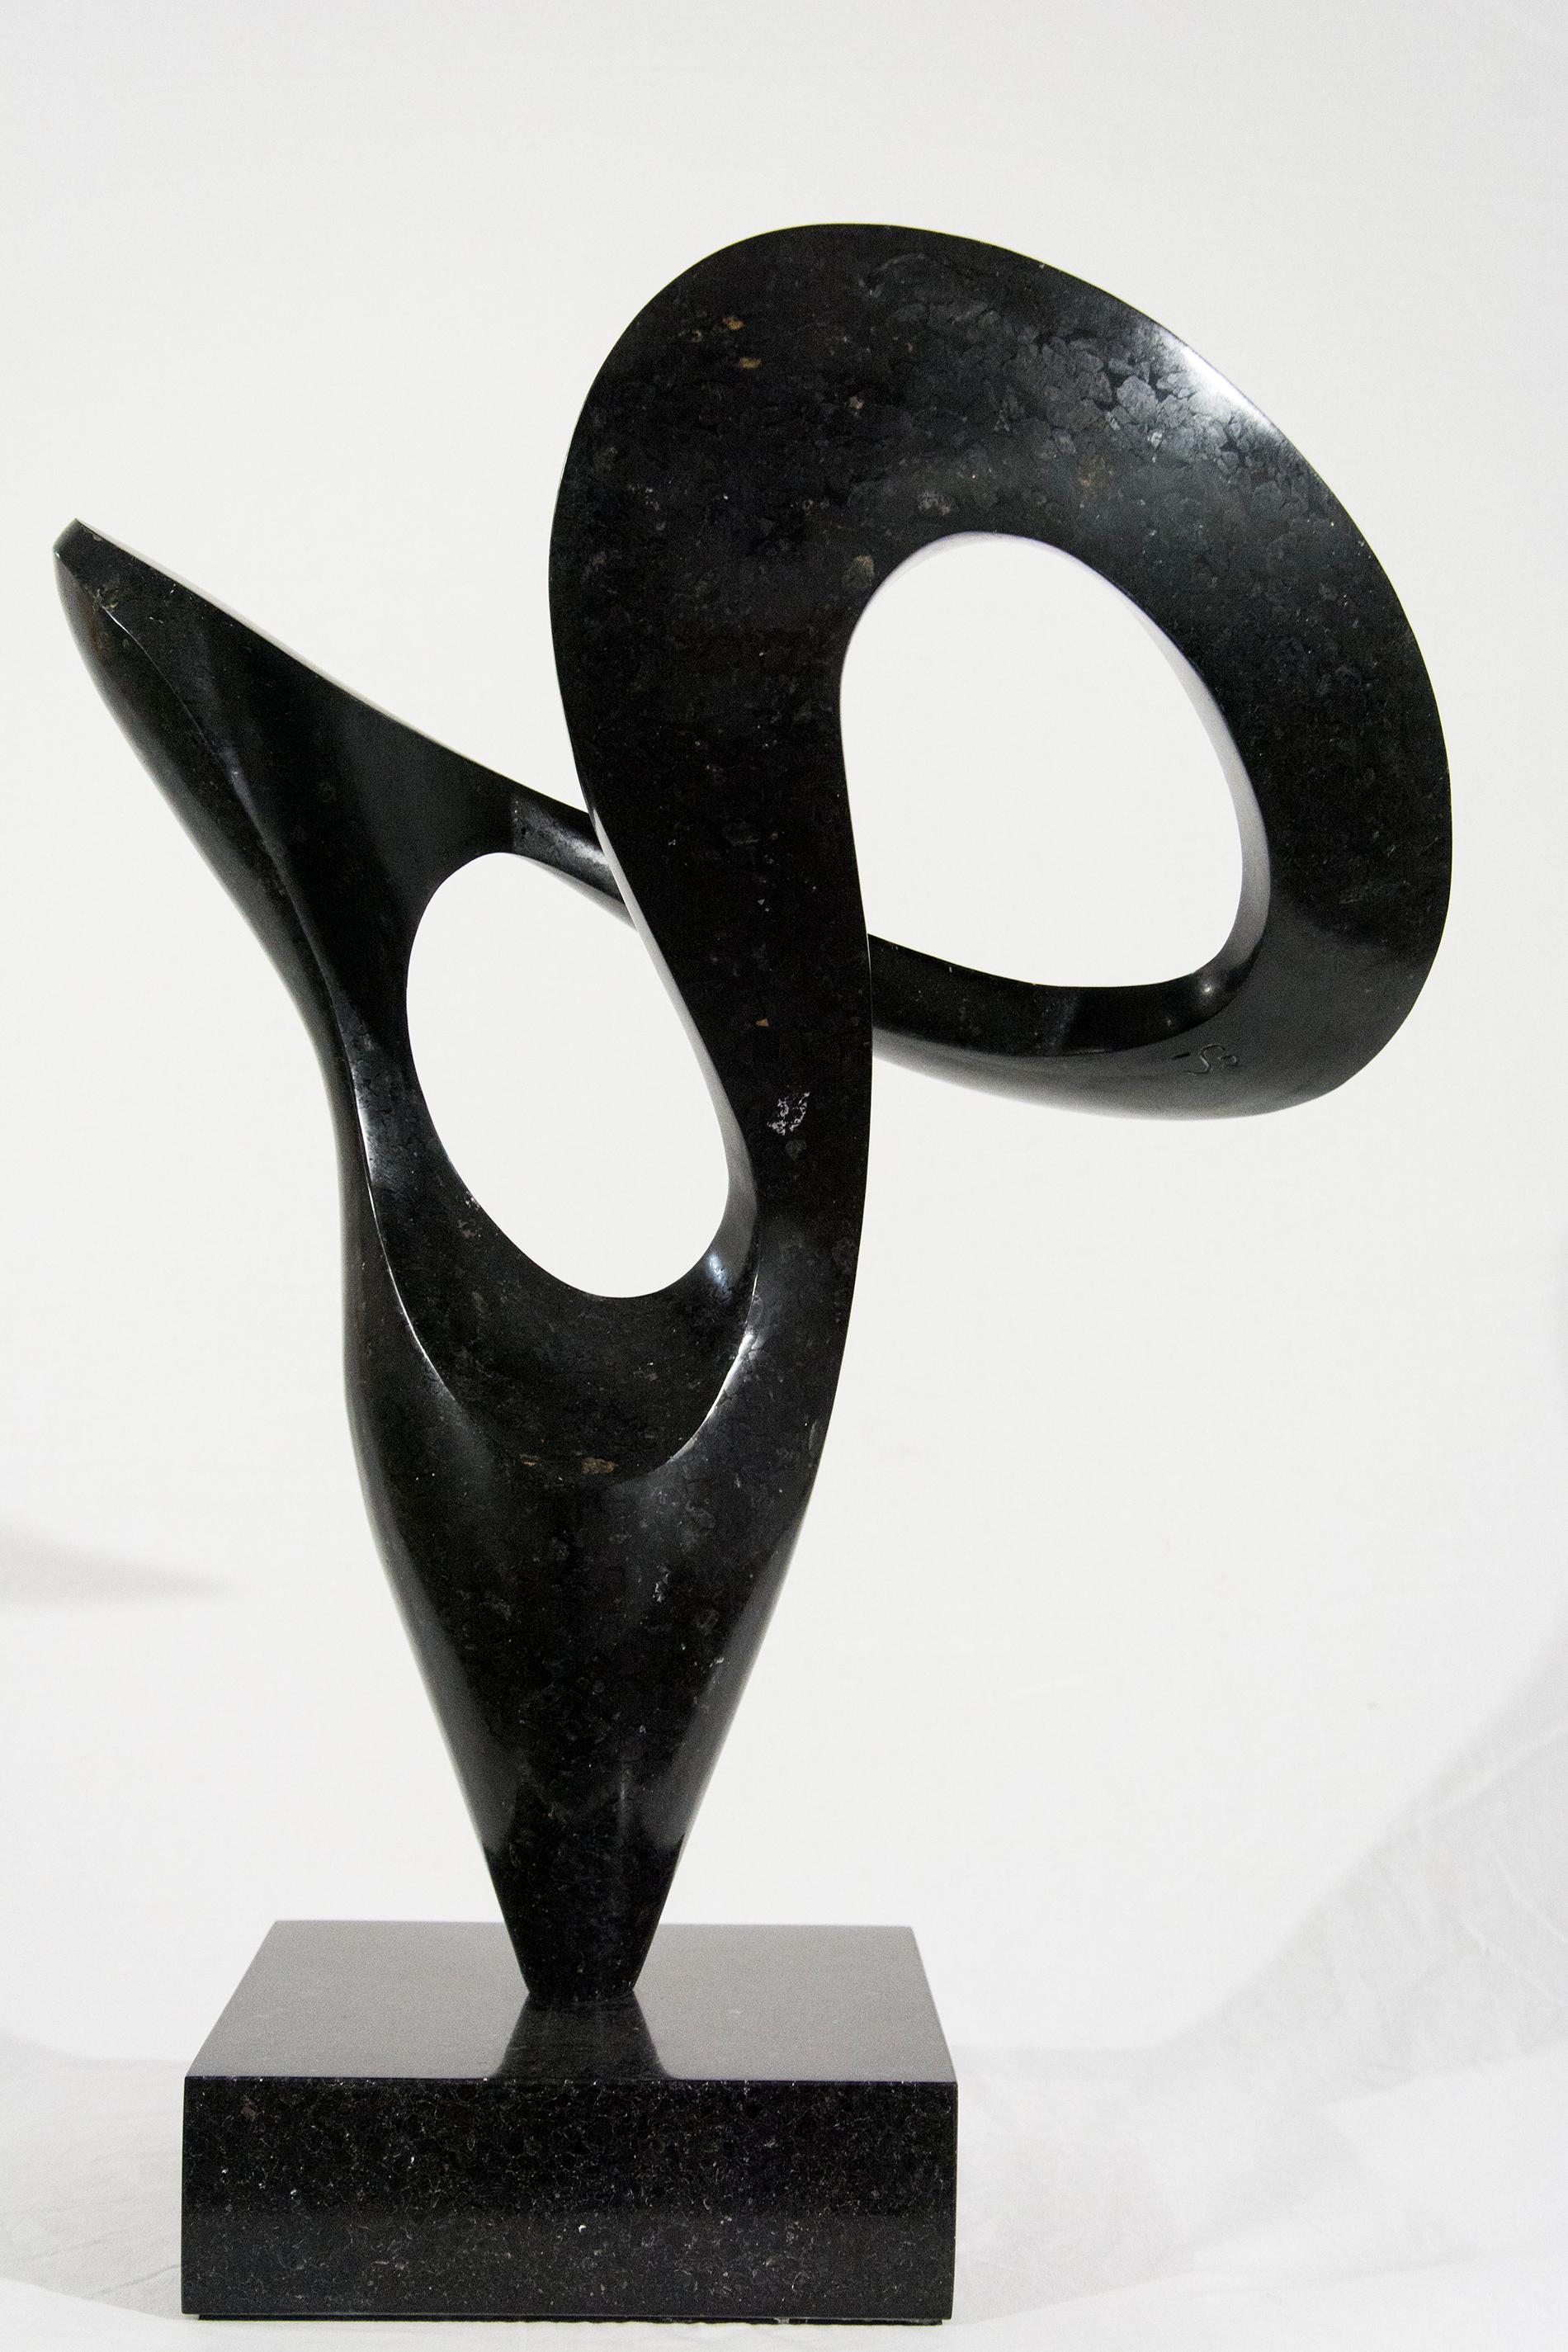 Pirouette 19/50 - glatt, schwarz, Granit, Indoor/Outdoor, abstrakte Skulptur – Sculpture von Jeremy Guy